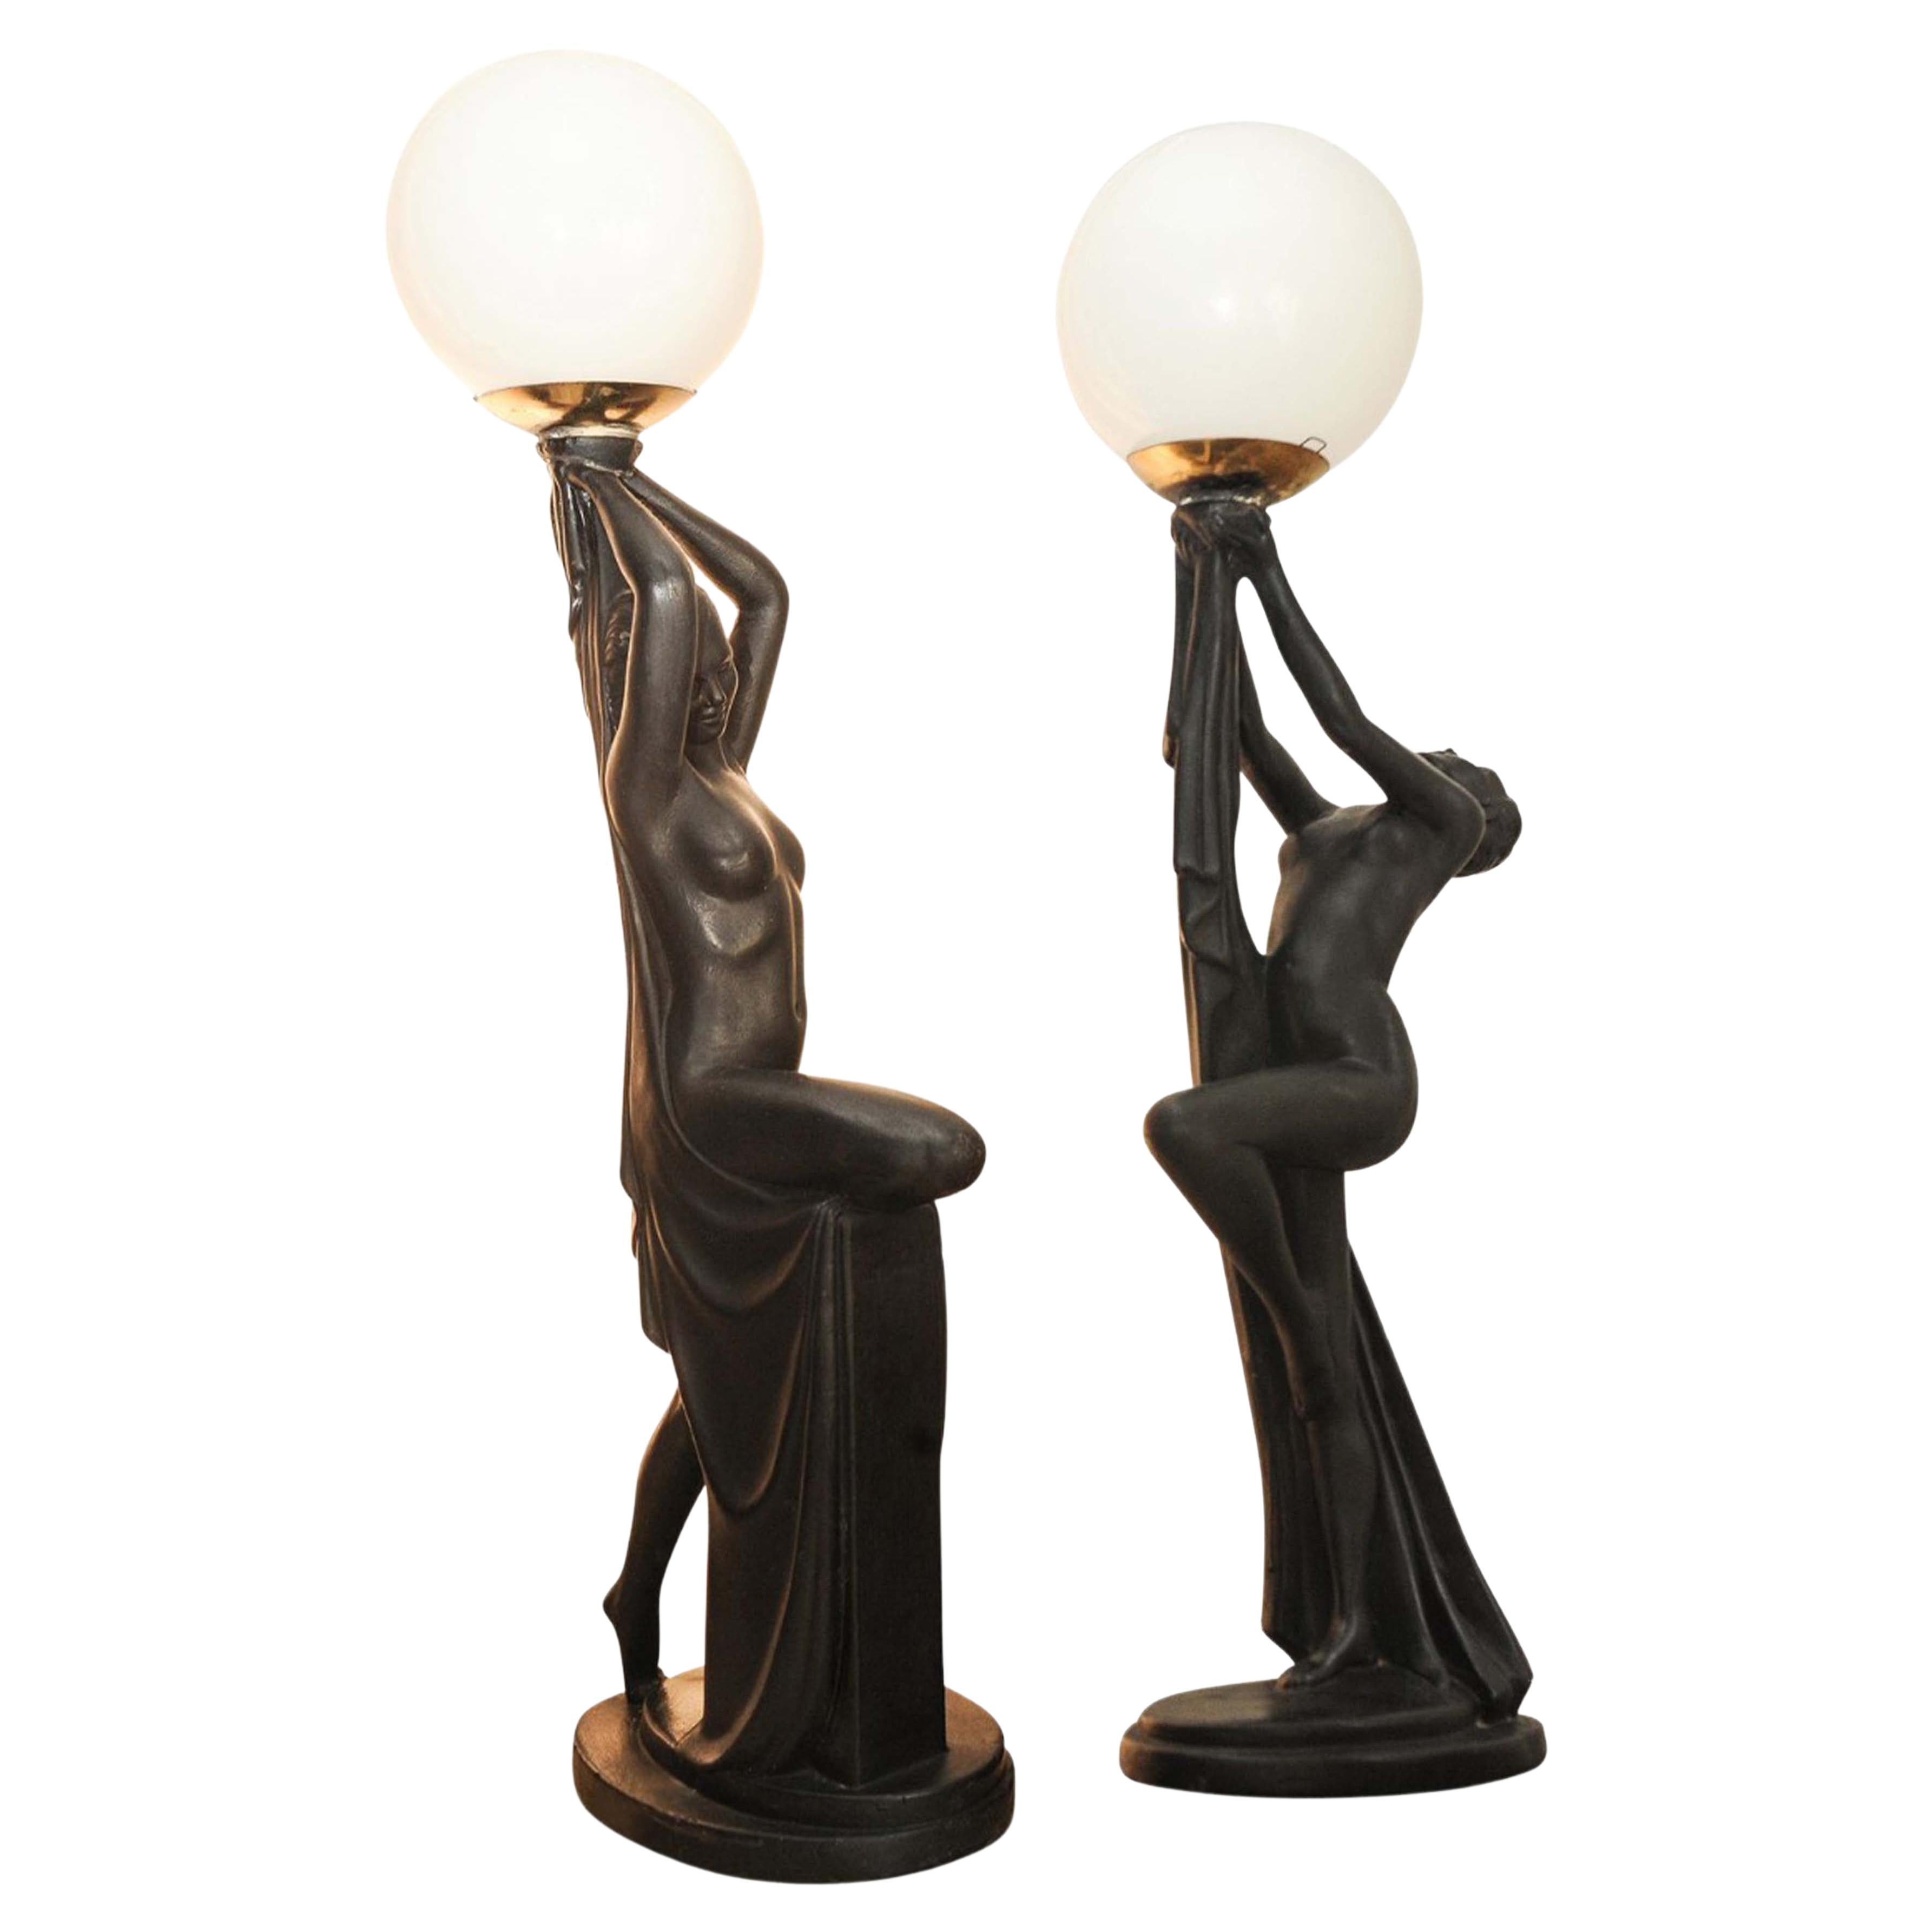 Pair of Exquisite Art Deco Ebonized Plaster Nude Feminine Form Table Lamps 1930s